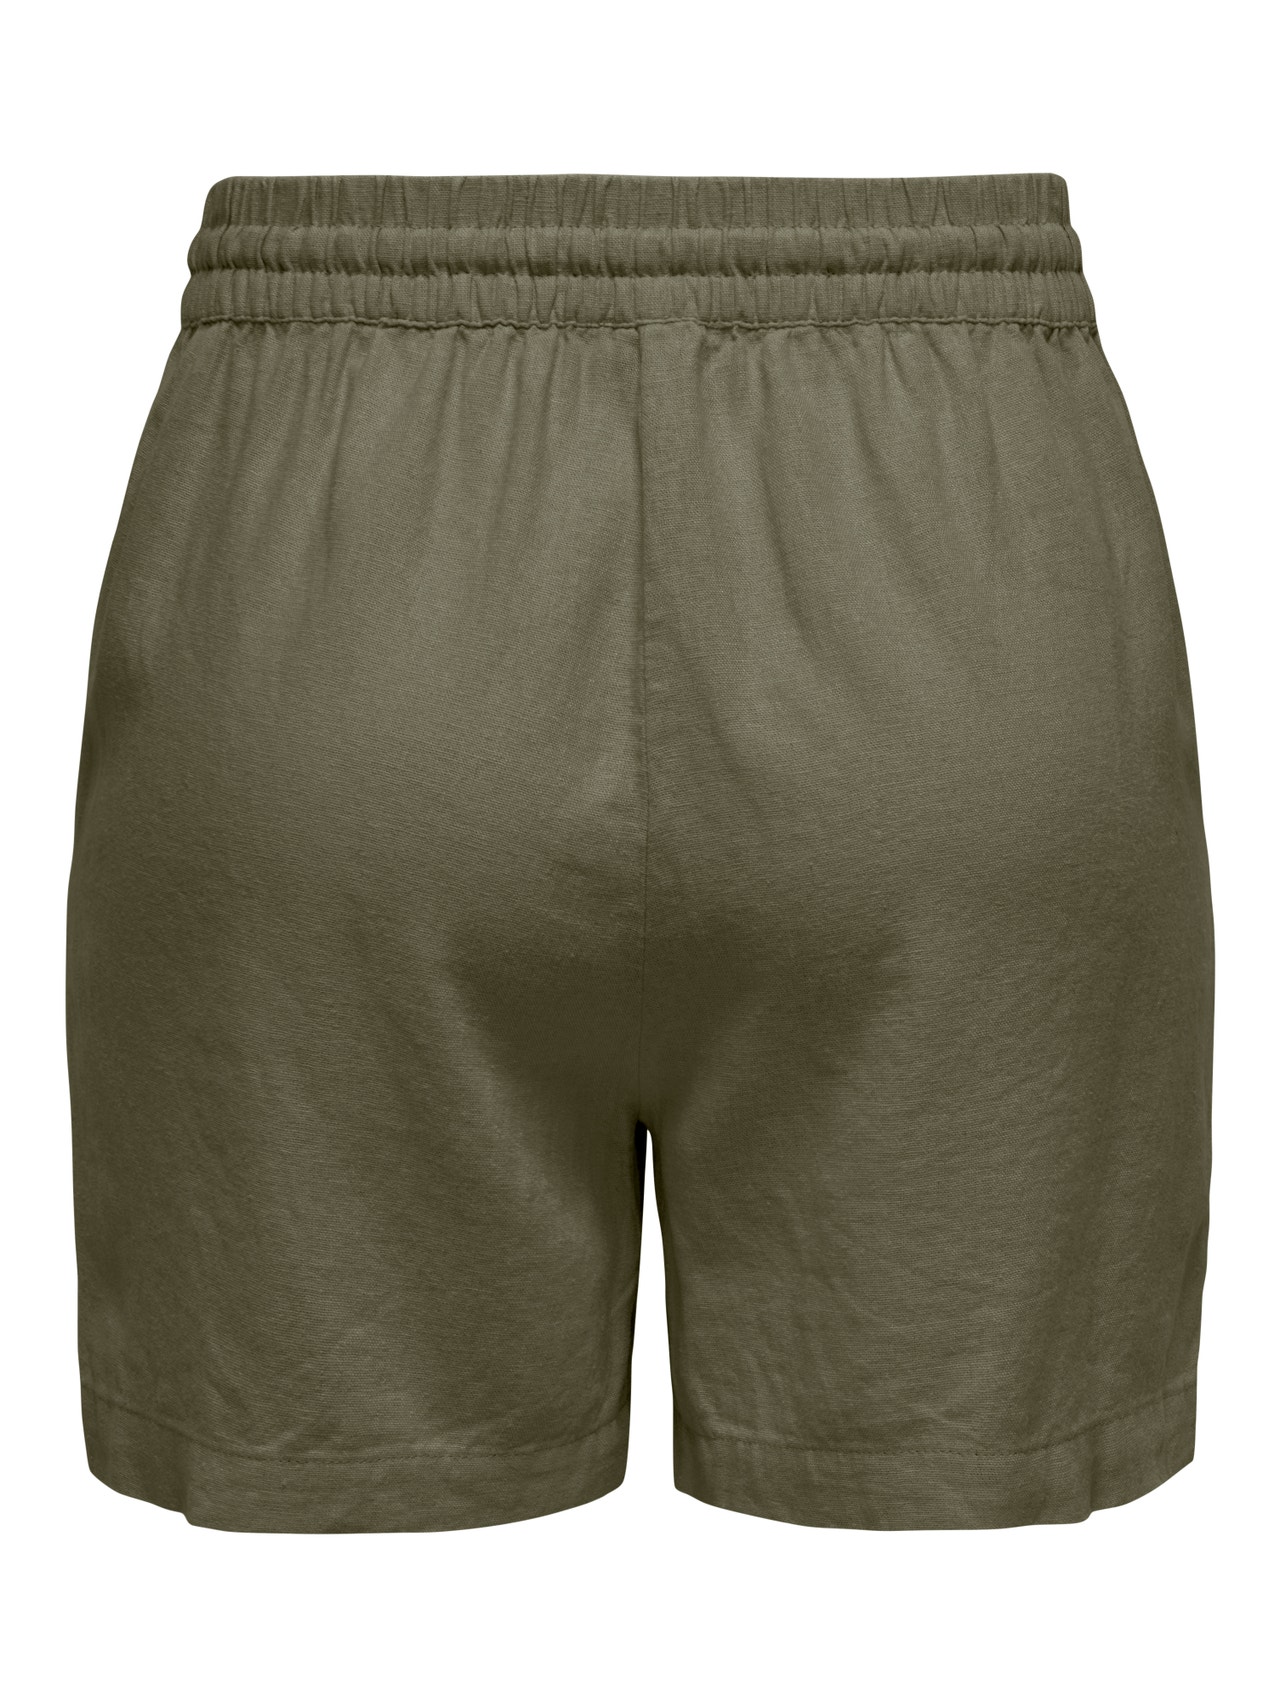 ONLY High waisted linen shorts -Kalamata - 15321518